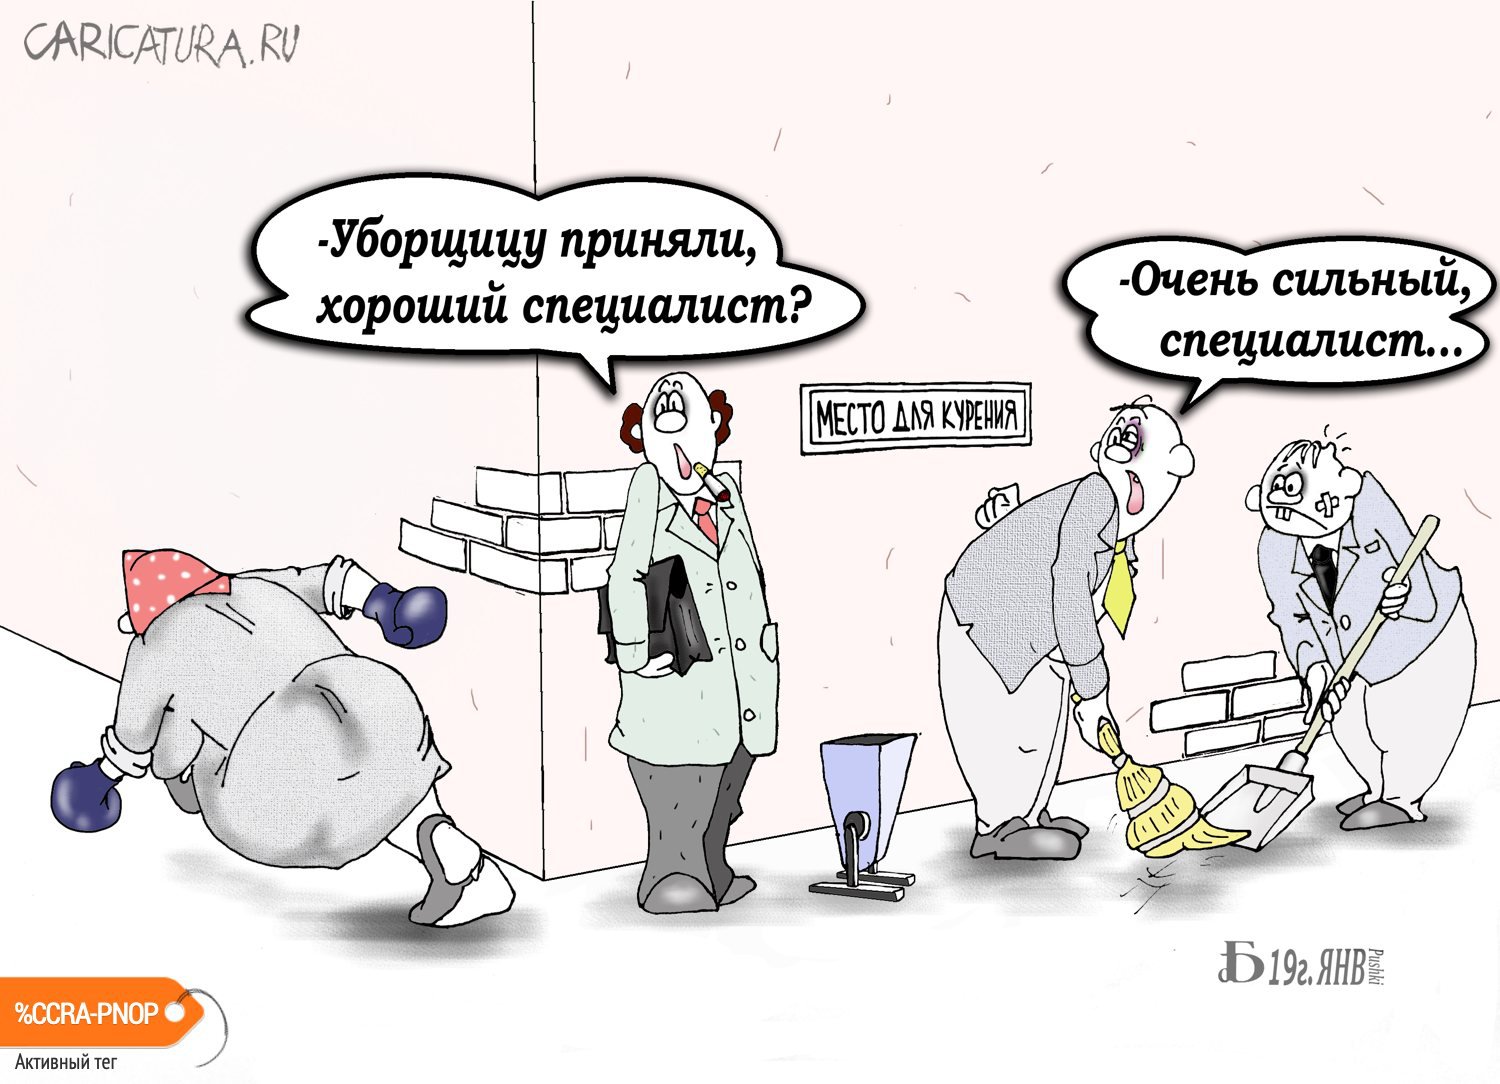 Карикатура "Про сильного специалиста", Борис Демин